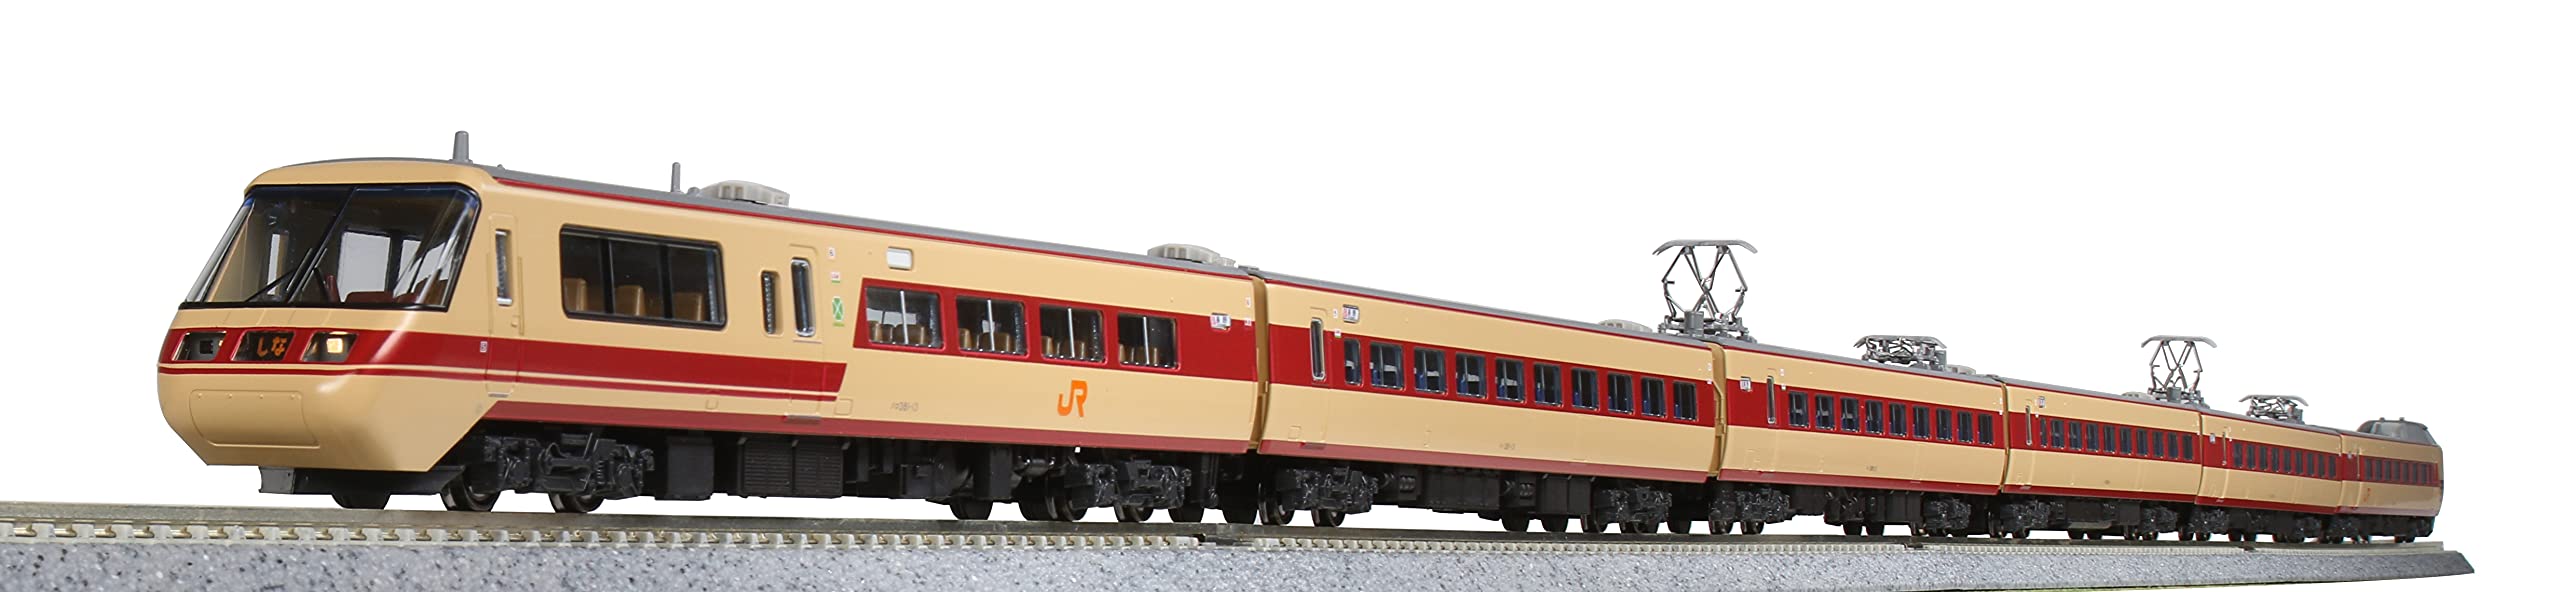 Kato Railway Model Train - N Gauge 381 Series 6-Car Basic Set Panorama Shinano Release